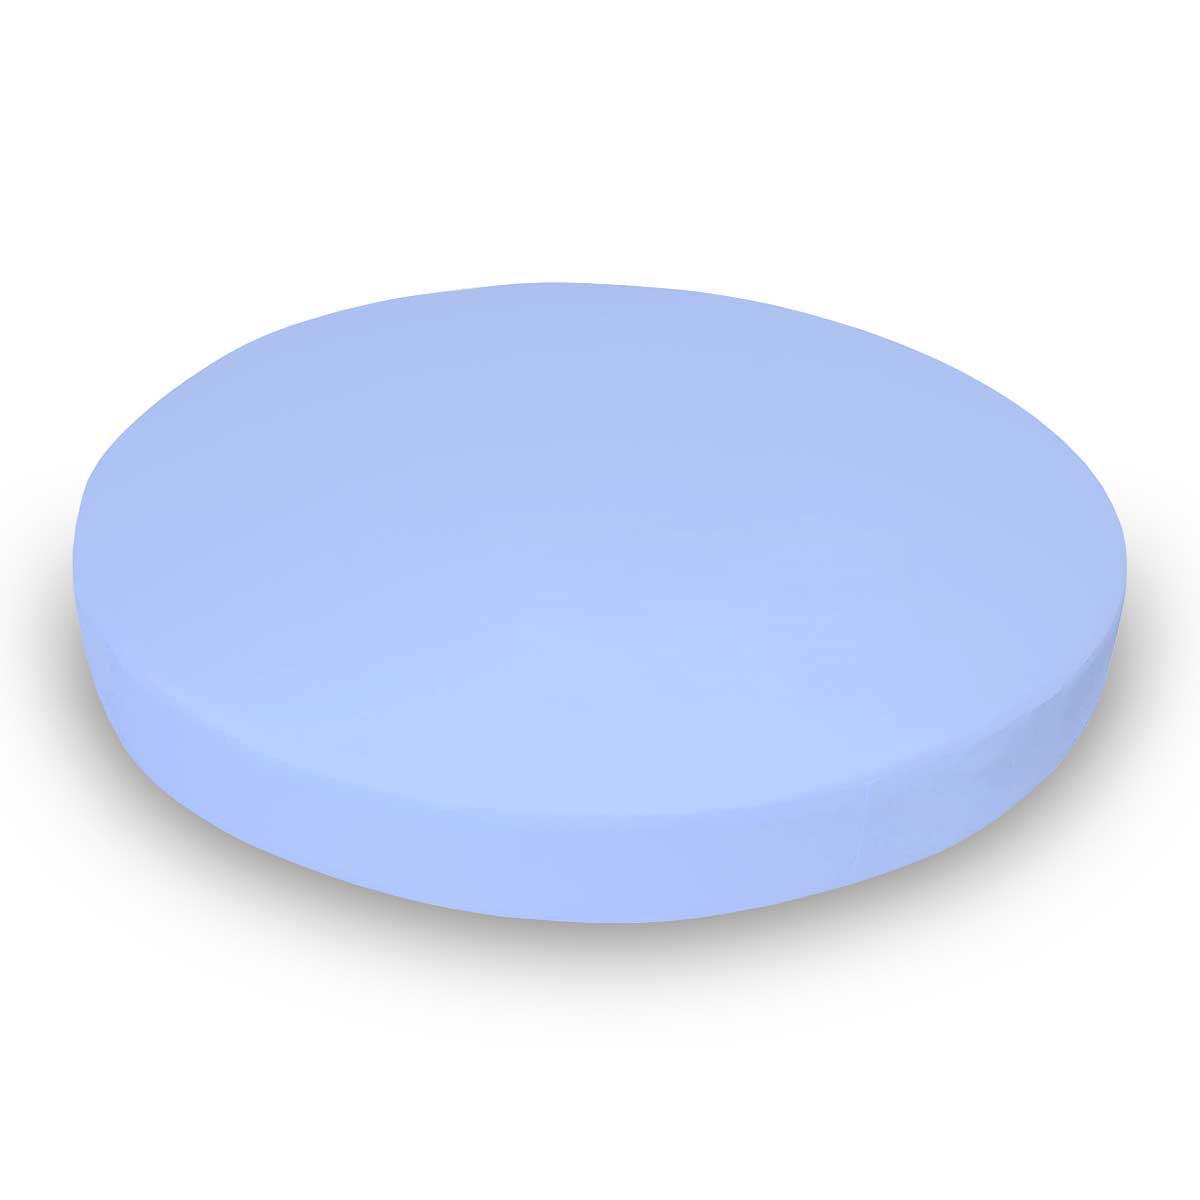 Oval Crib (Stokke Sleepi) - Flannel FS4 - Blue - Fitted  Oval